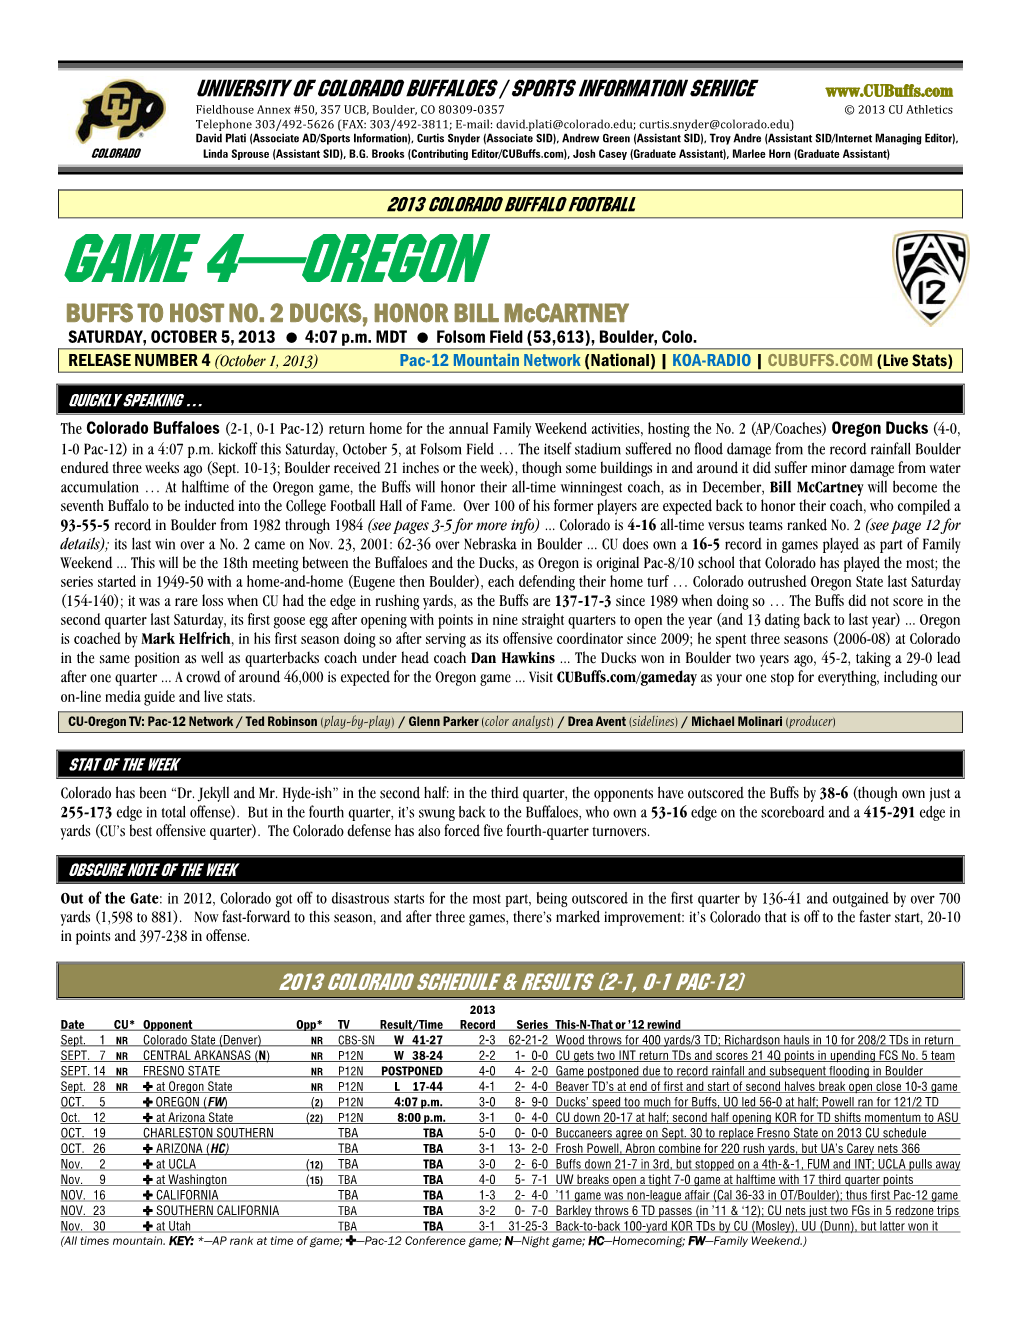 Game 4—Oregon Buffs to Host No